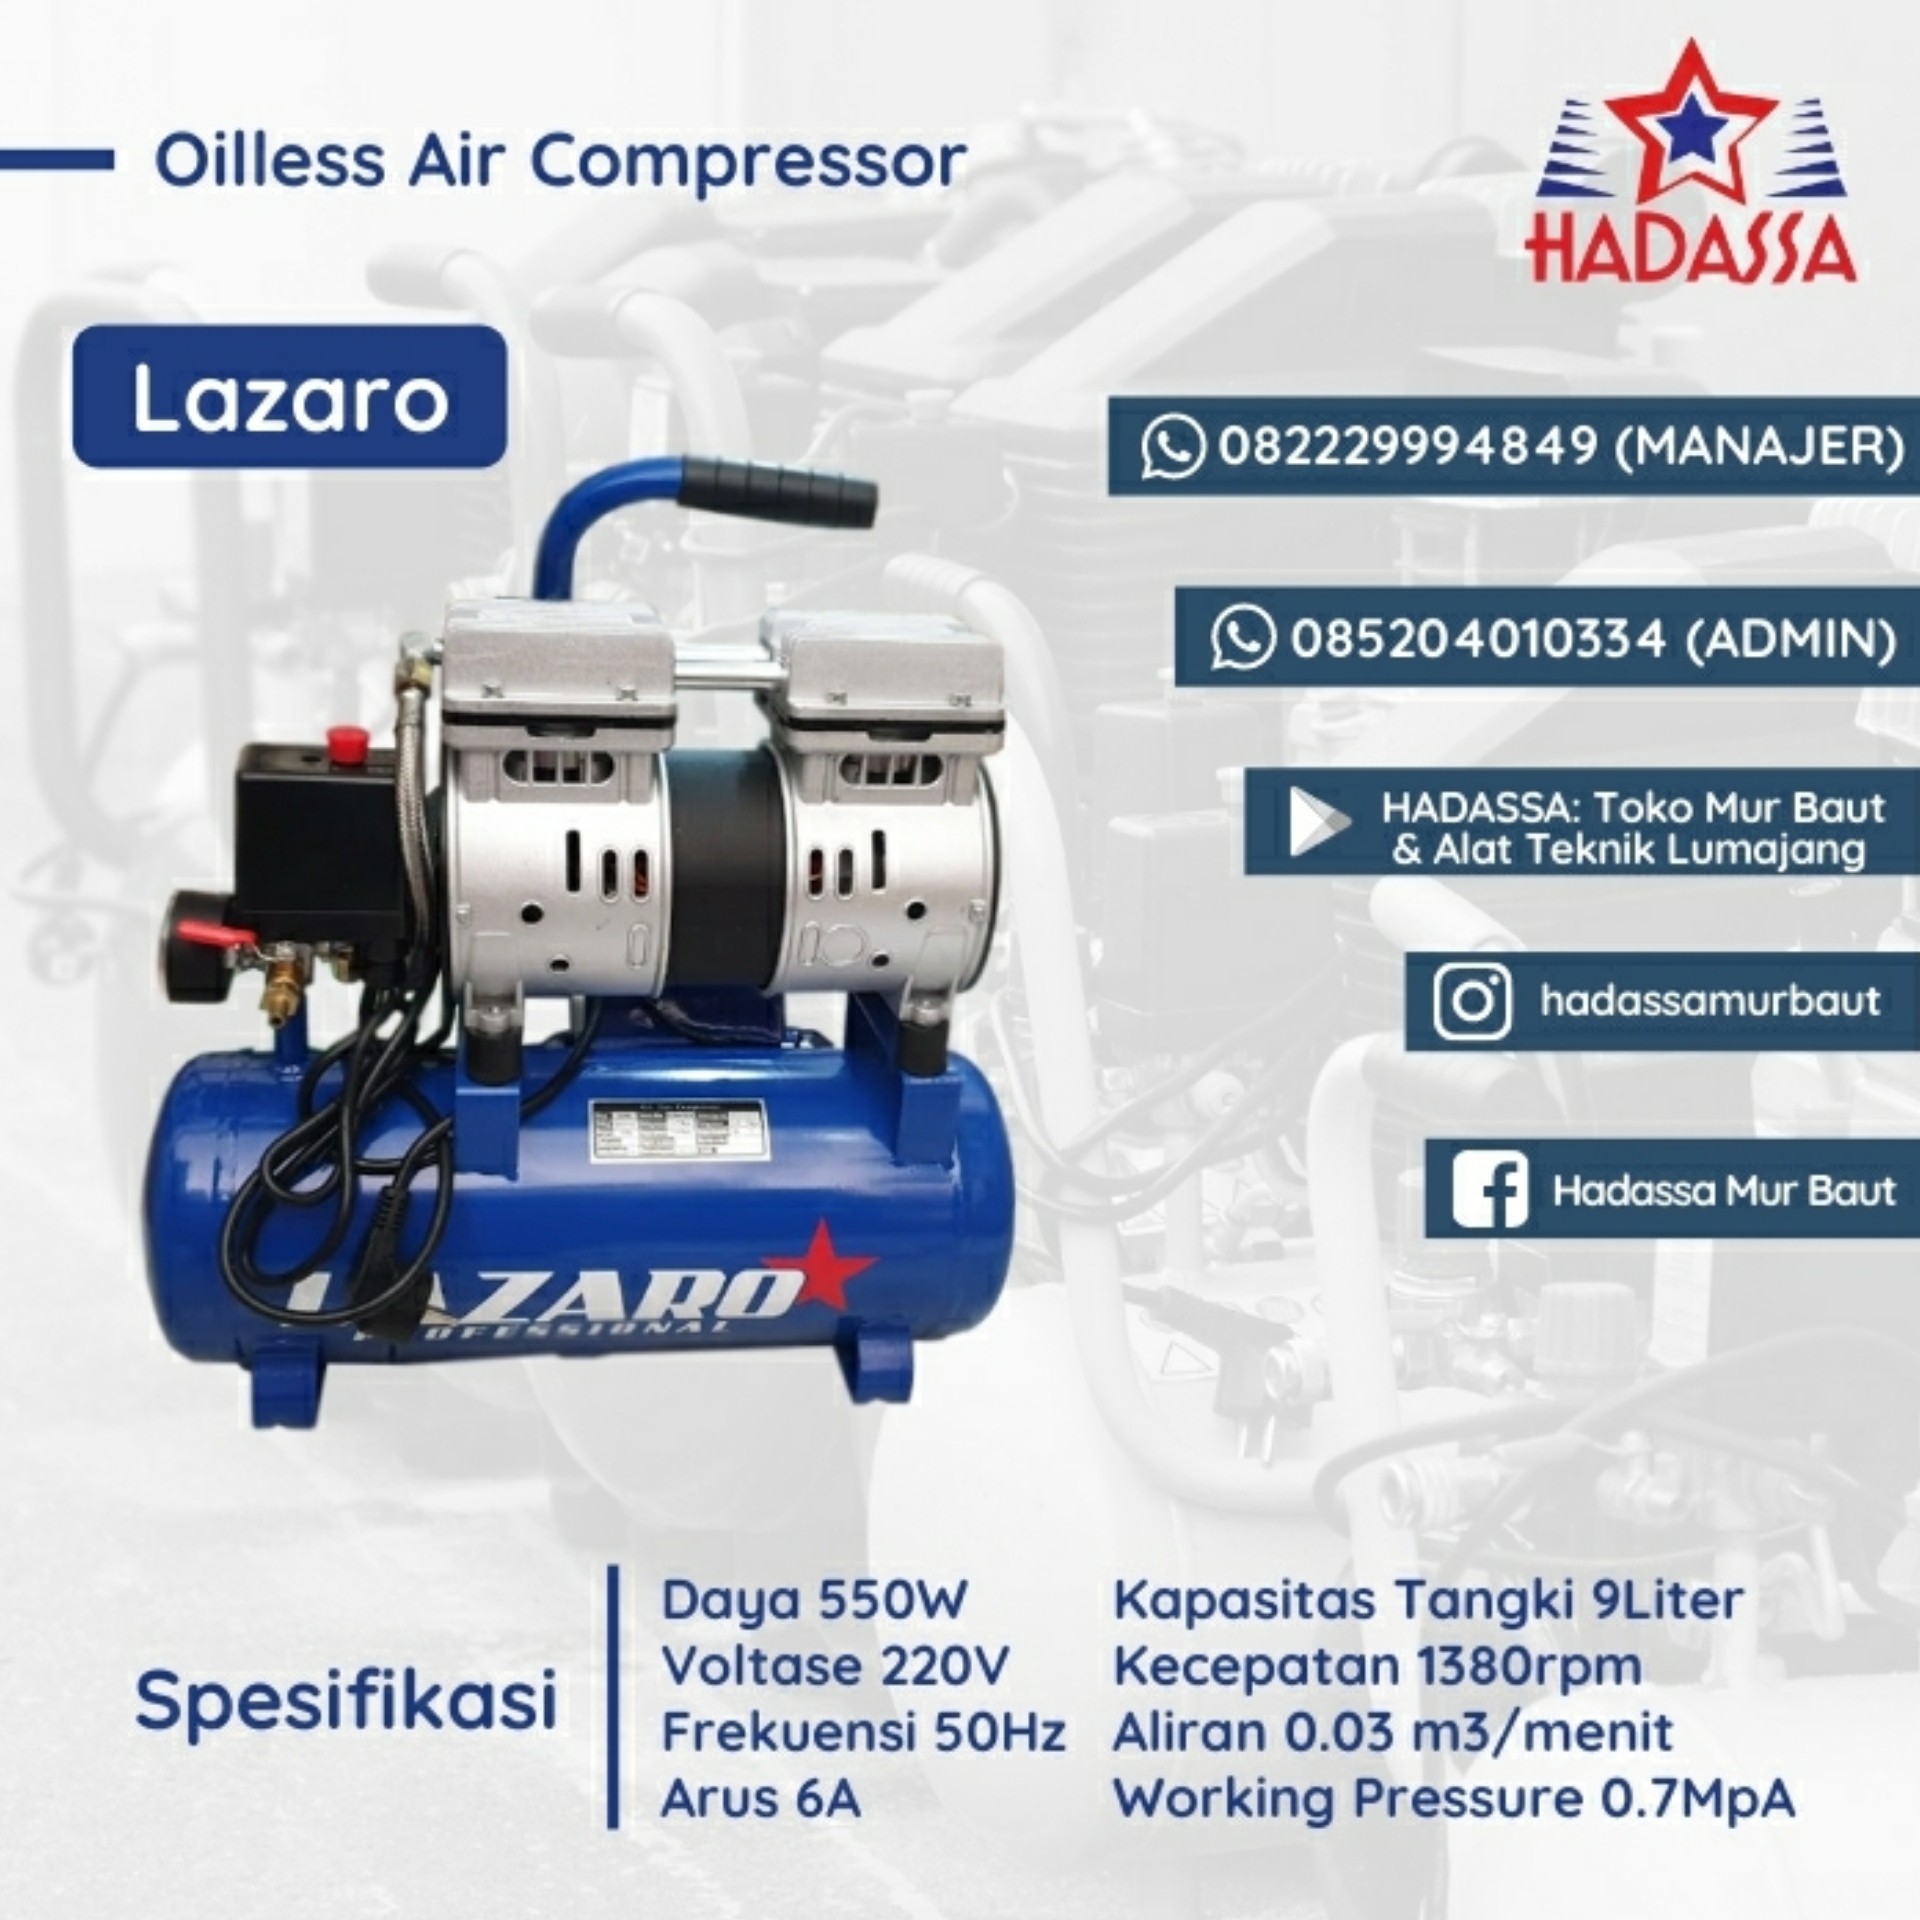 Oilless Air Compressor Lazaro